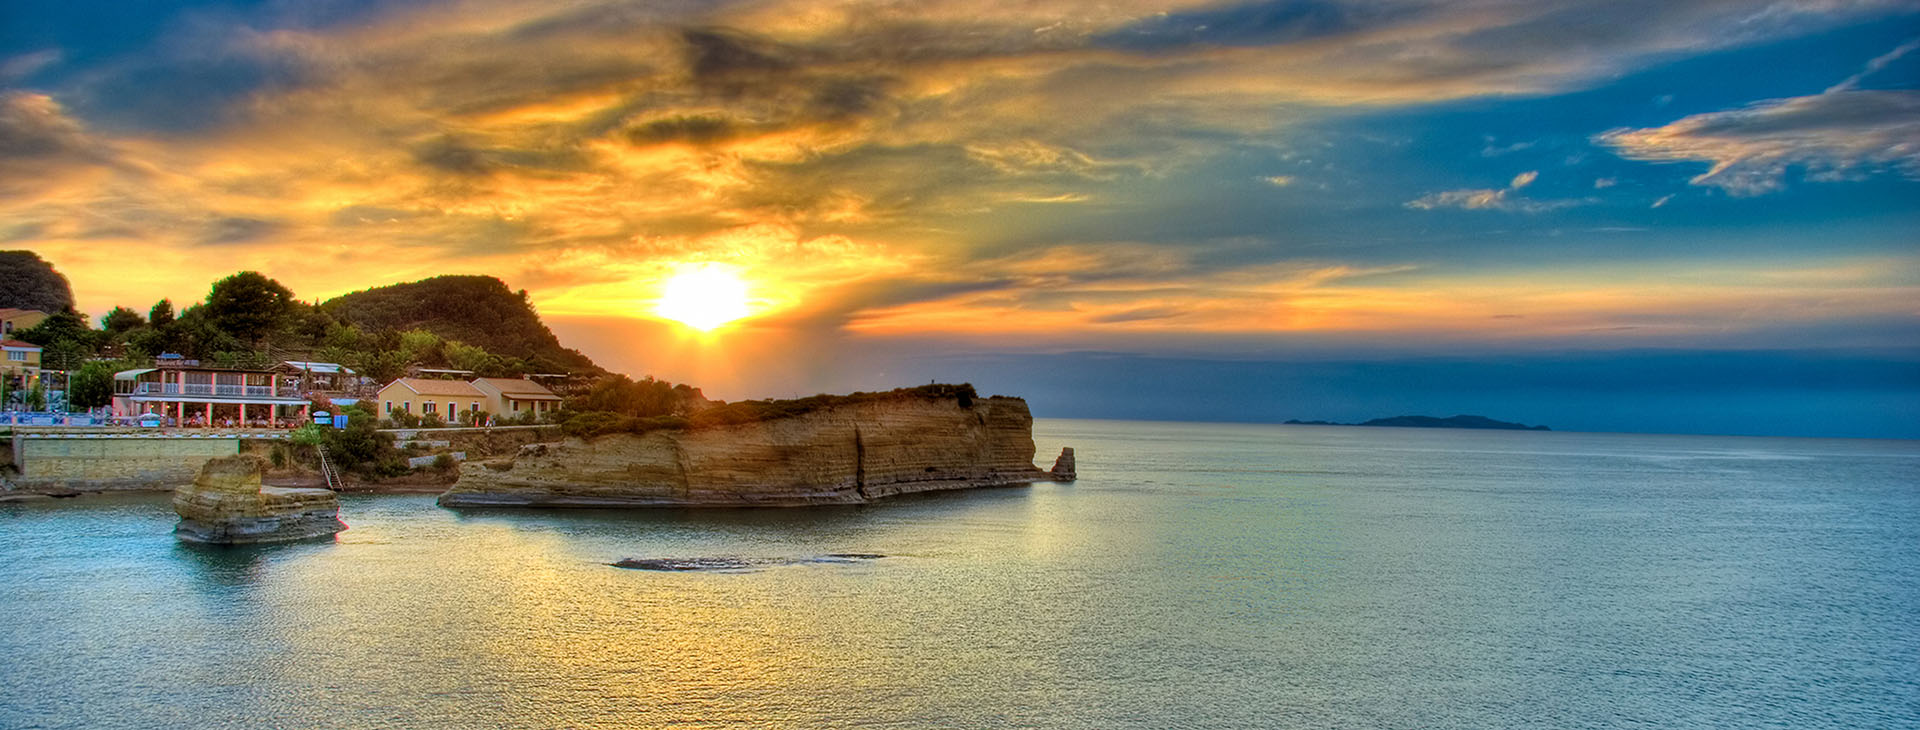 Sunset over Corfu island